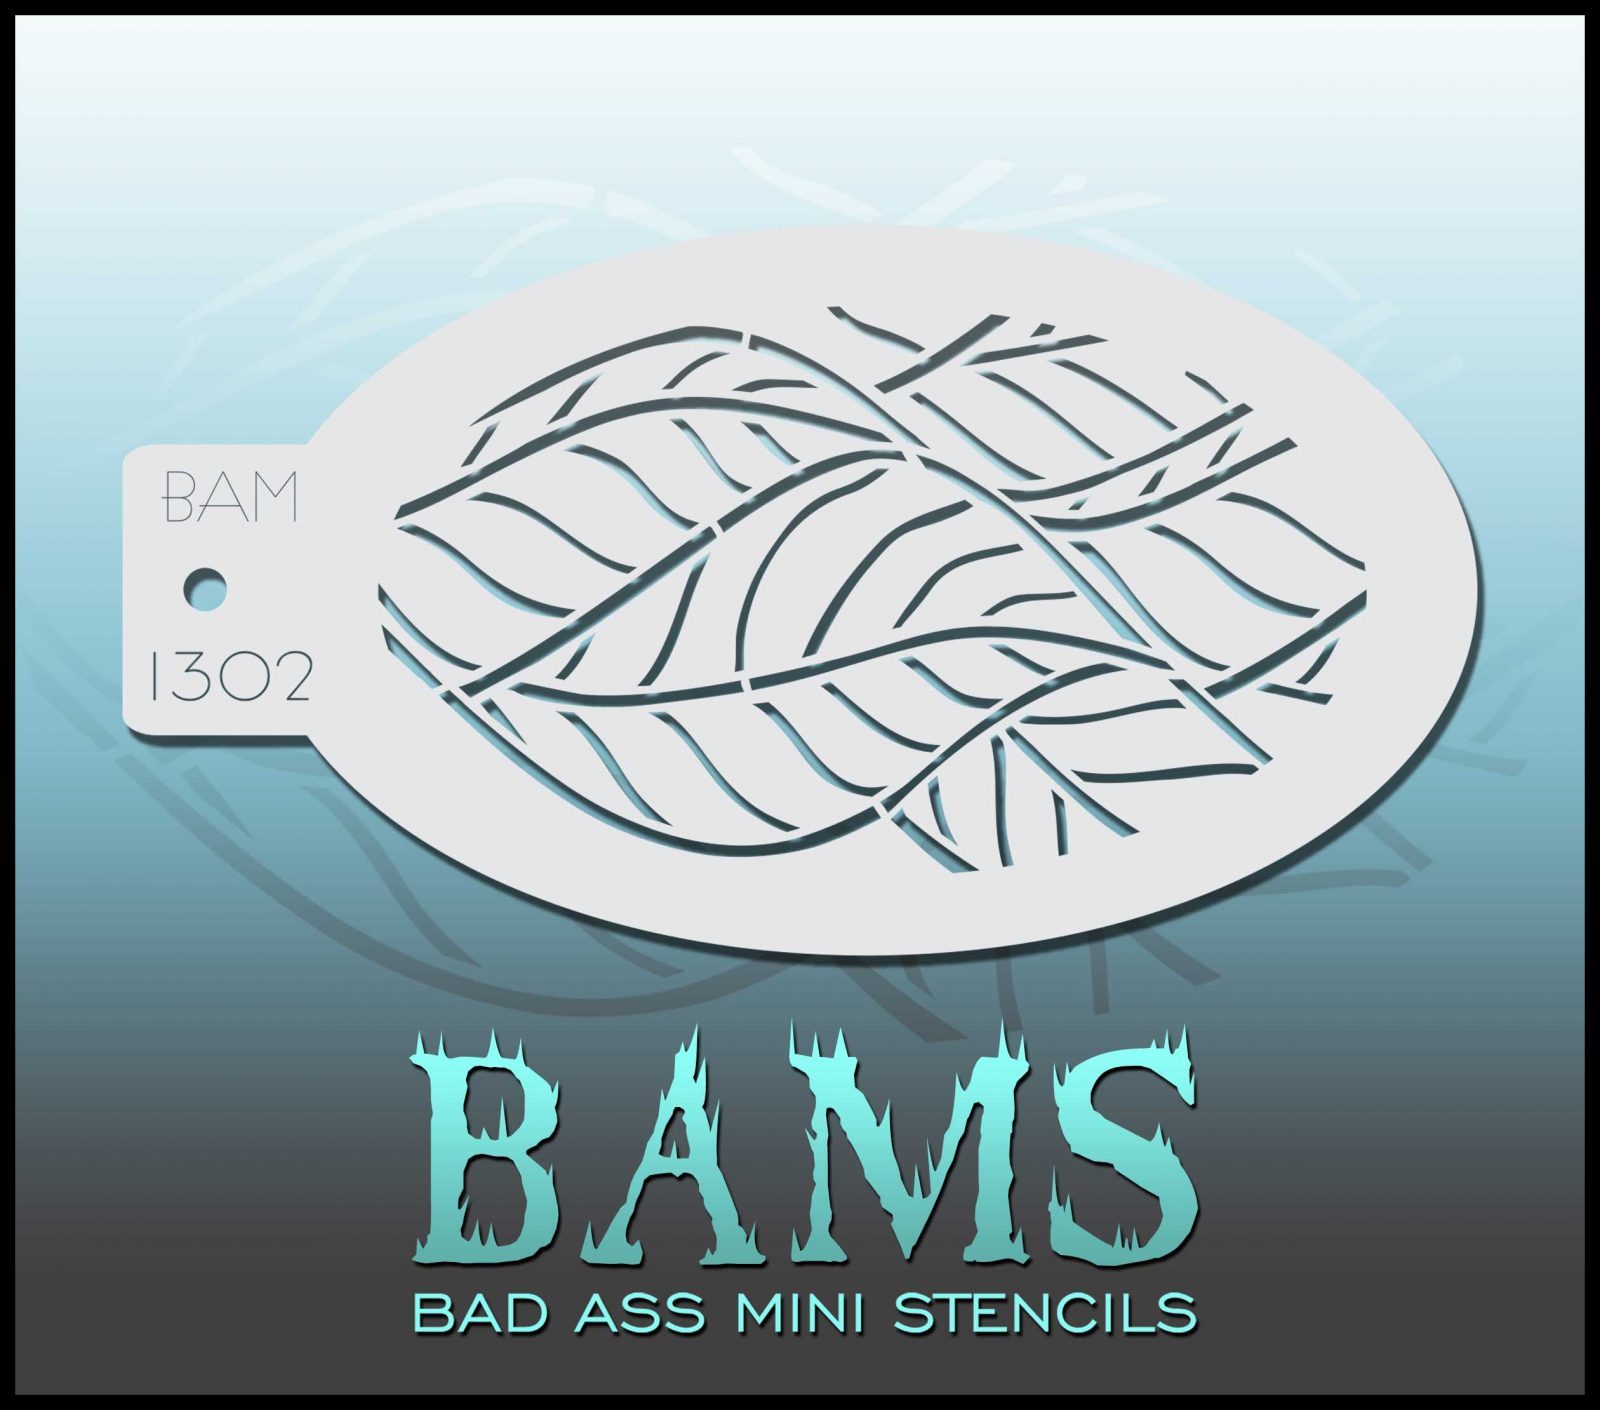 Bad Ass Stencils - BAM 1302 - Leaf patterns